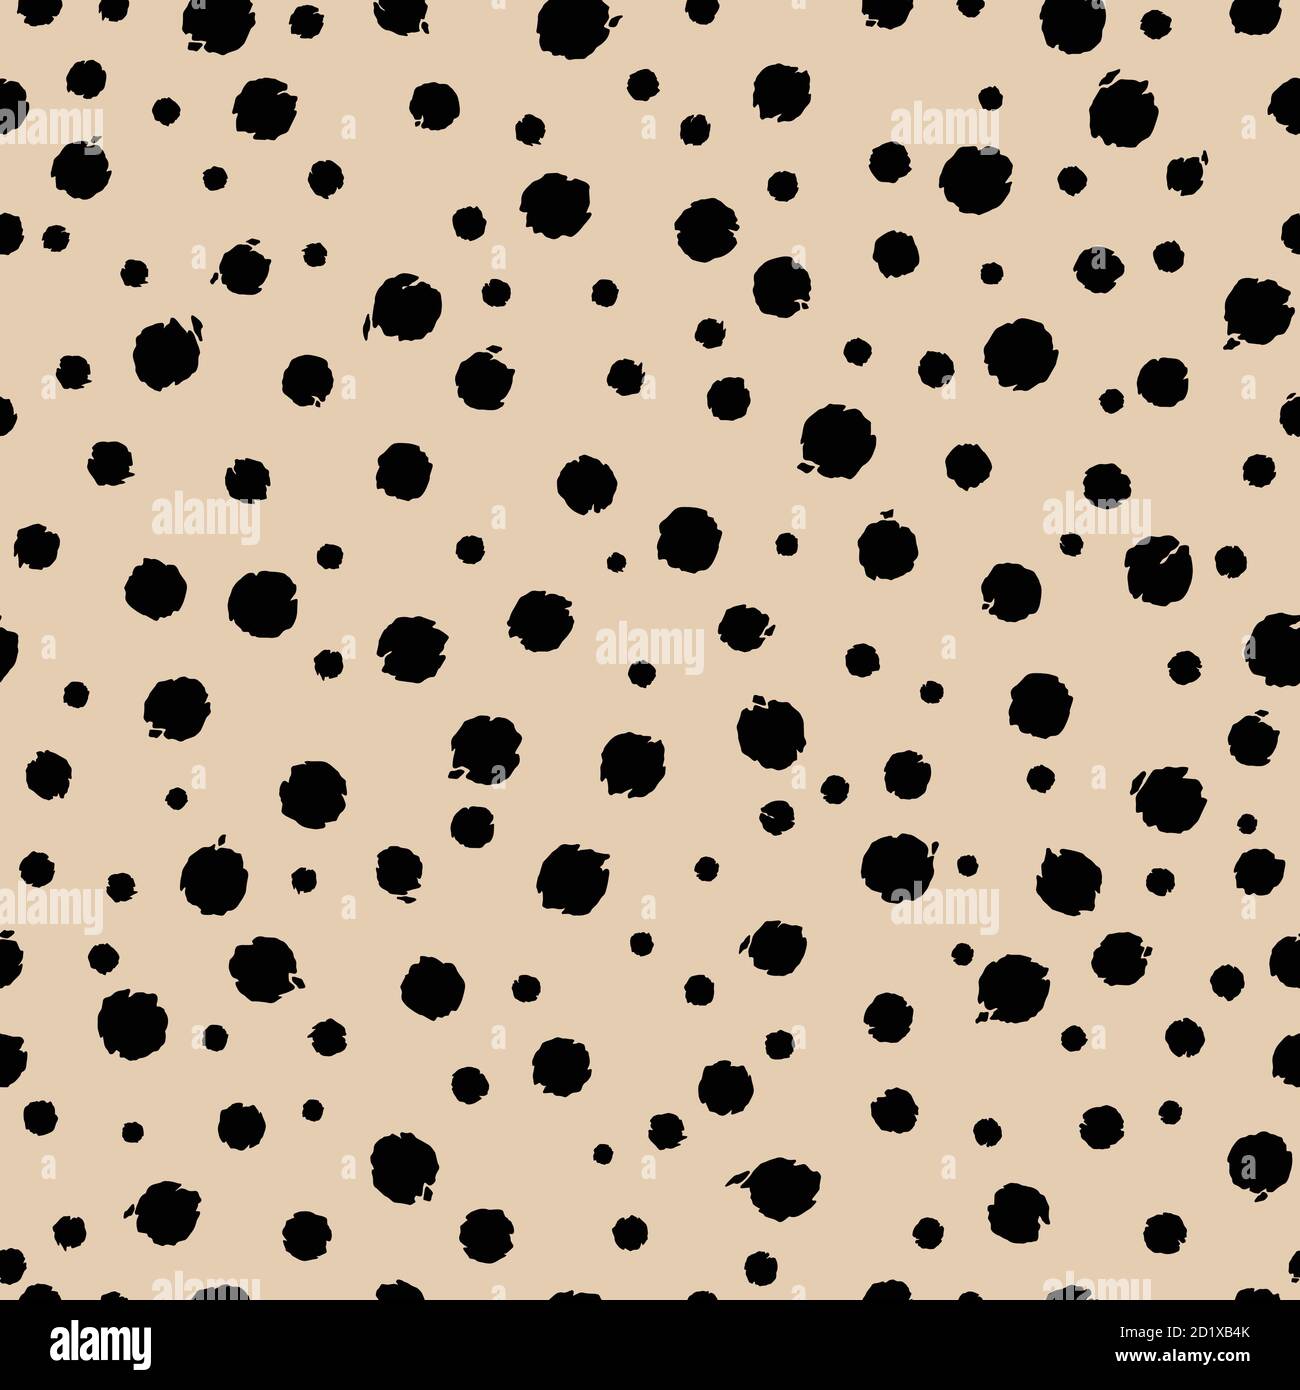 Cheetah skin seamless pattern design. Cheetah dots vector illustration background. Wildlife fur skin design illustration for print, web, home decor, f Stock Vector